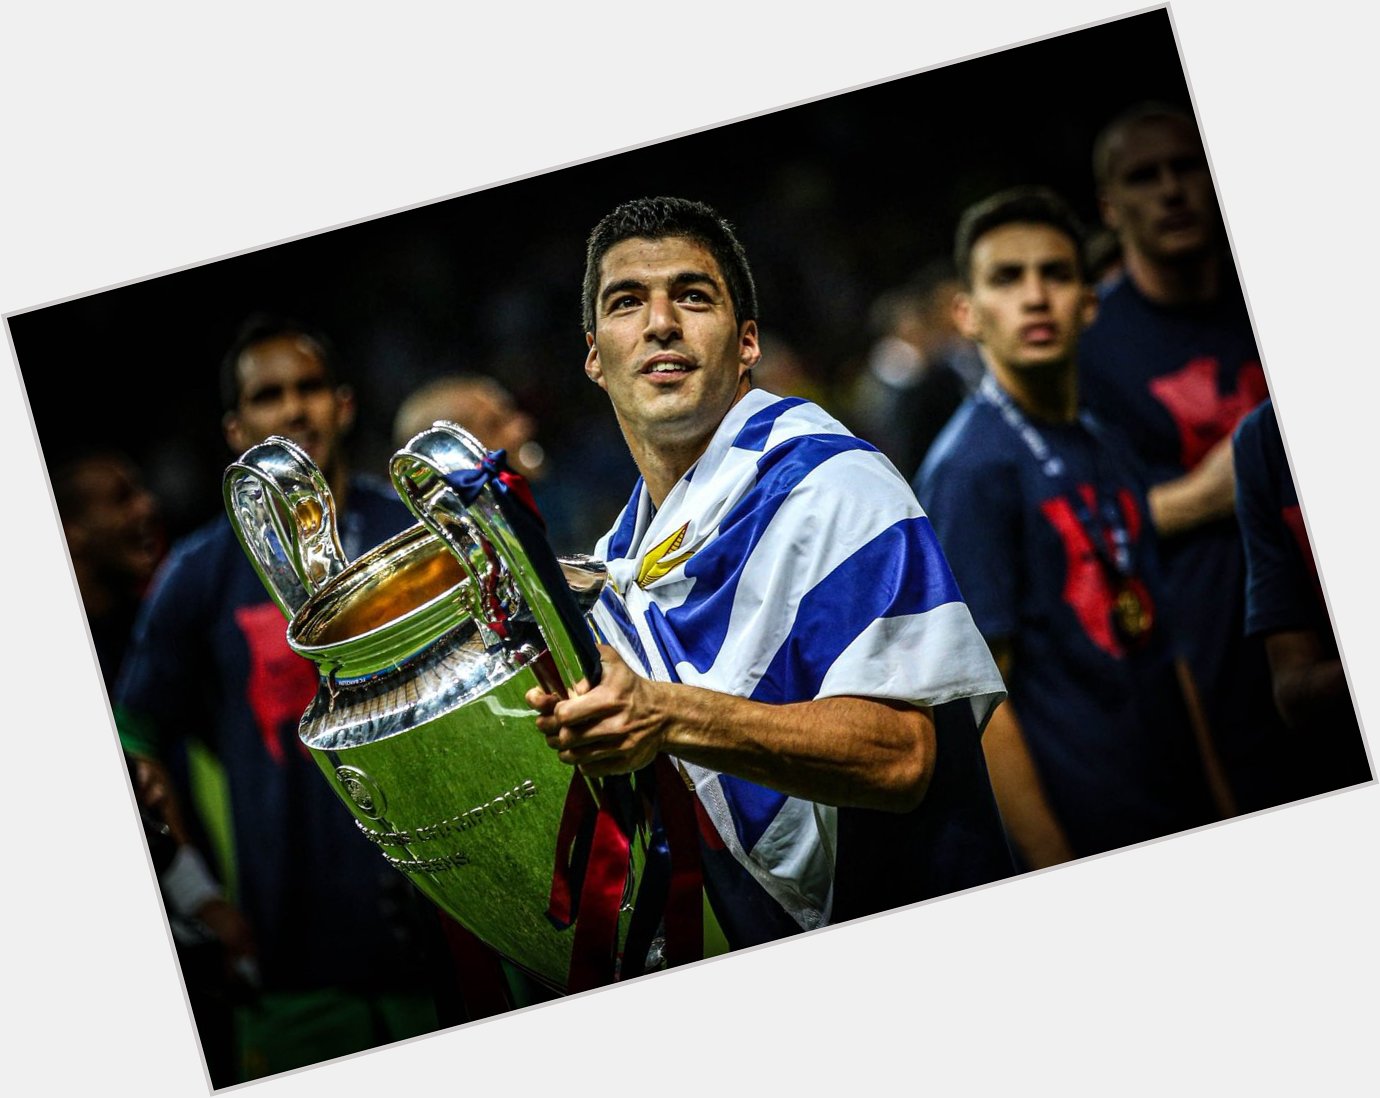 Happy 36th birthday Luis Suarez, The greatest striker of our generation. El pistolero   